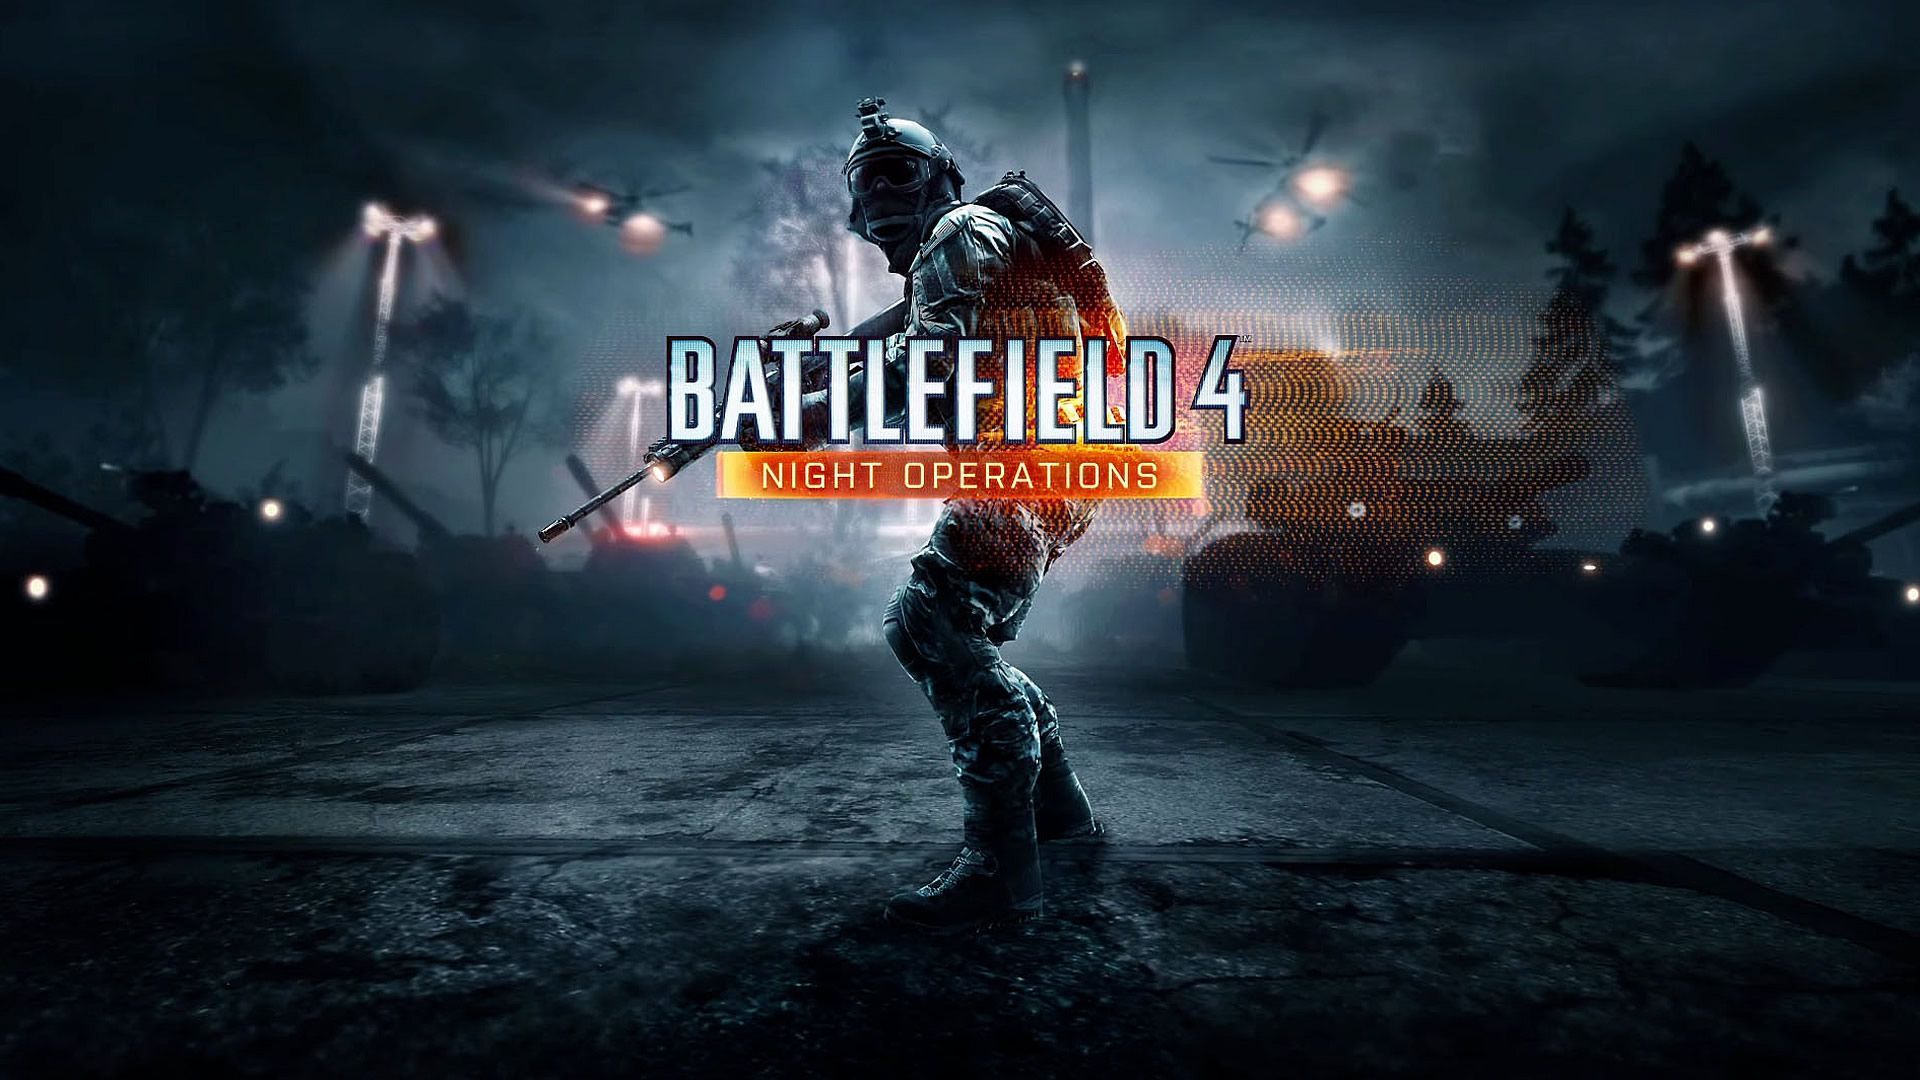 Battlefield 4 Night Operations wallpaper - Battlefield 4